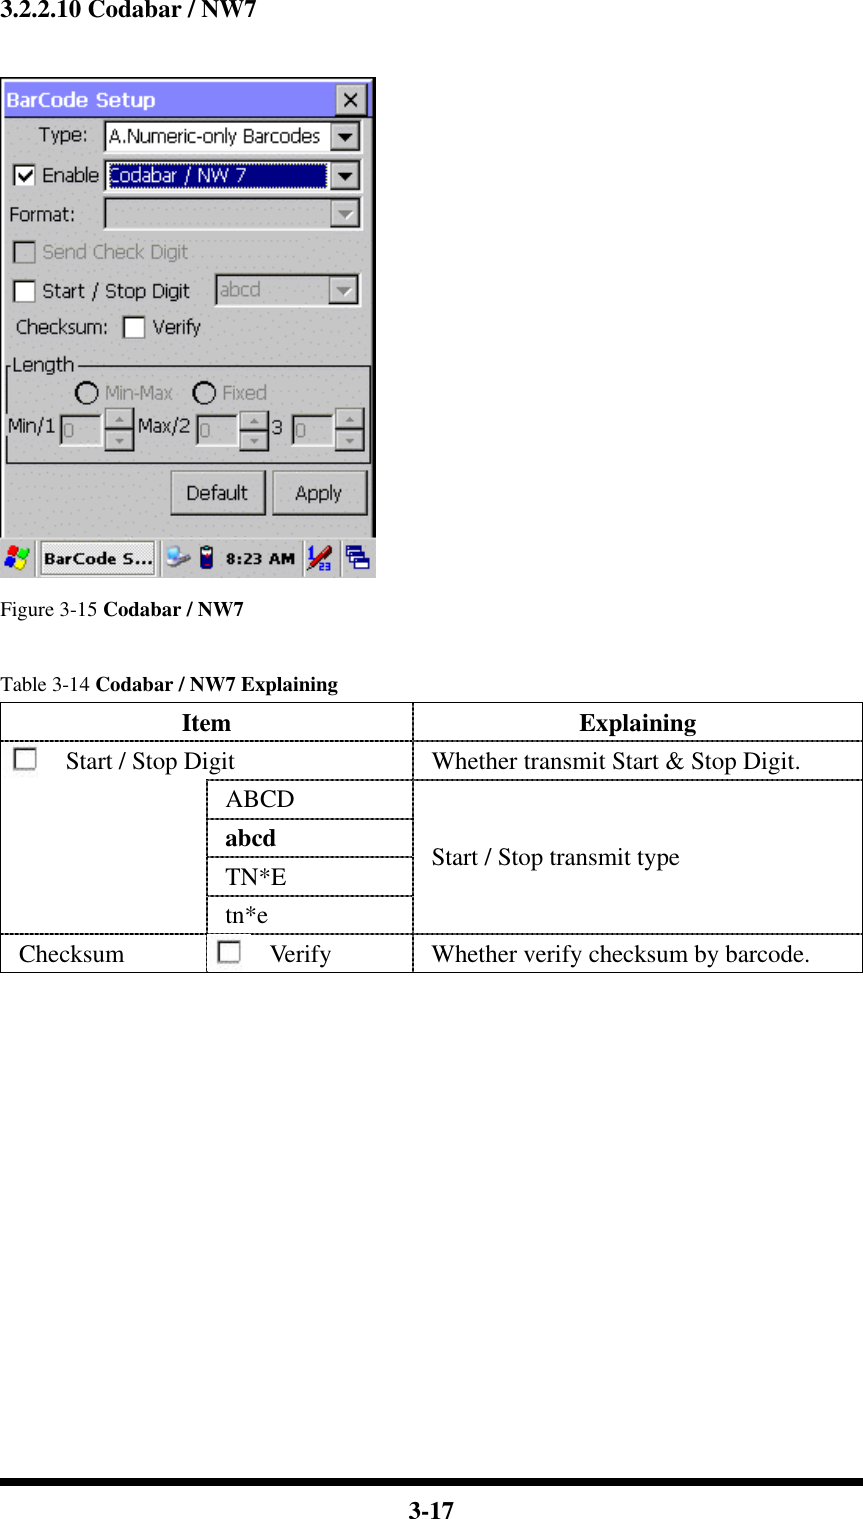  3-17 3.2.2.10 Codabar / NW7   Figure 3-15 Codabar / NW7  Table 3-14 Codabar / NW7 Explaining Item Explaining Start / Stop Digit Whether transmit Start &amp; Stop Digit. ABCD abcd   TN*E  tn*e Start / Stop transmit type Checksum Verify Whether verify checksum by barcode.             